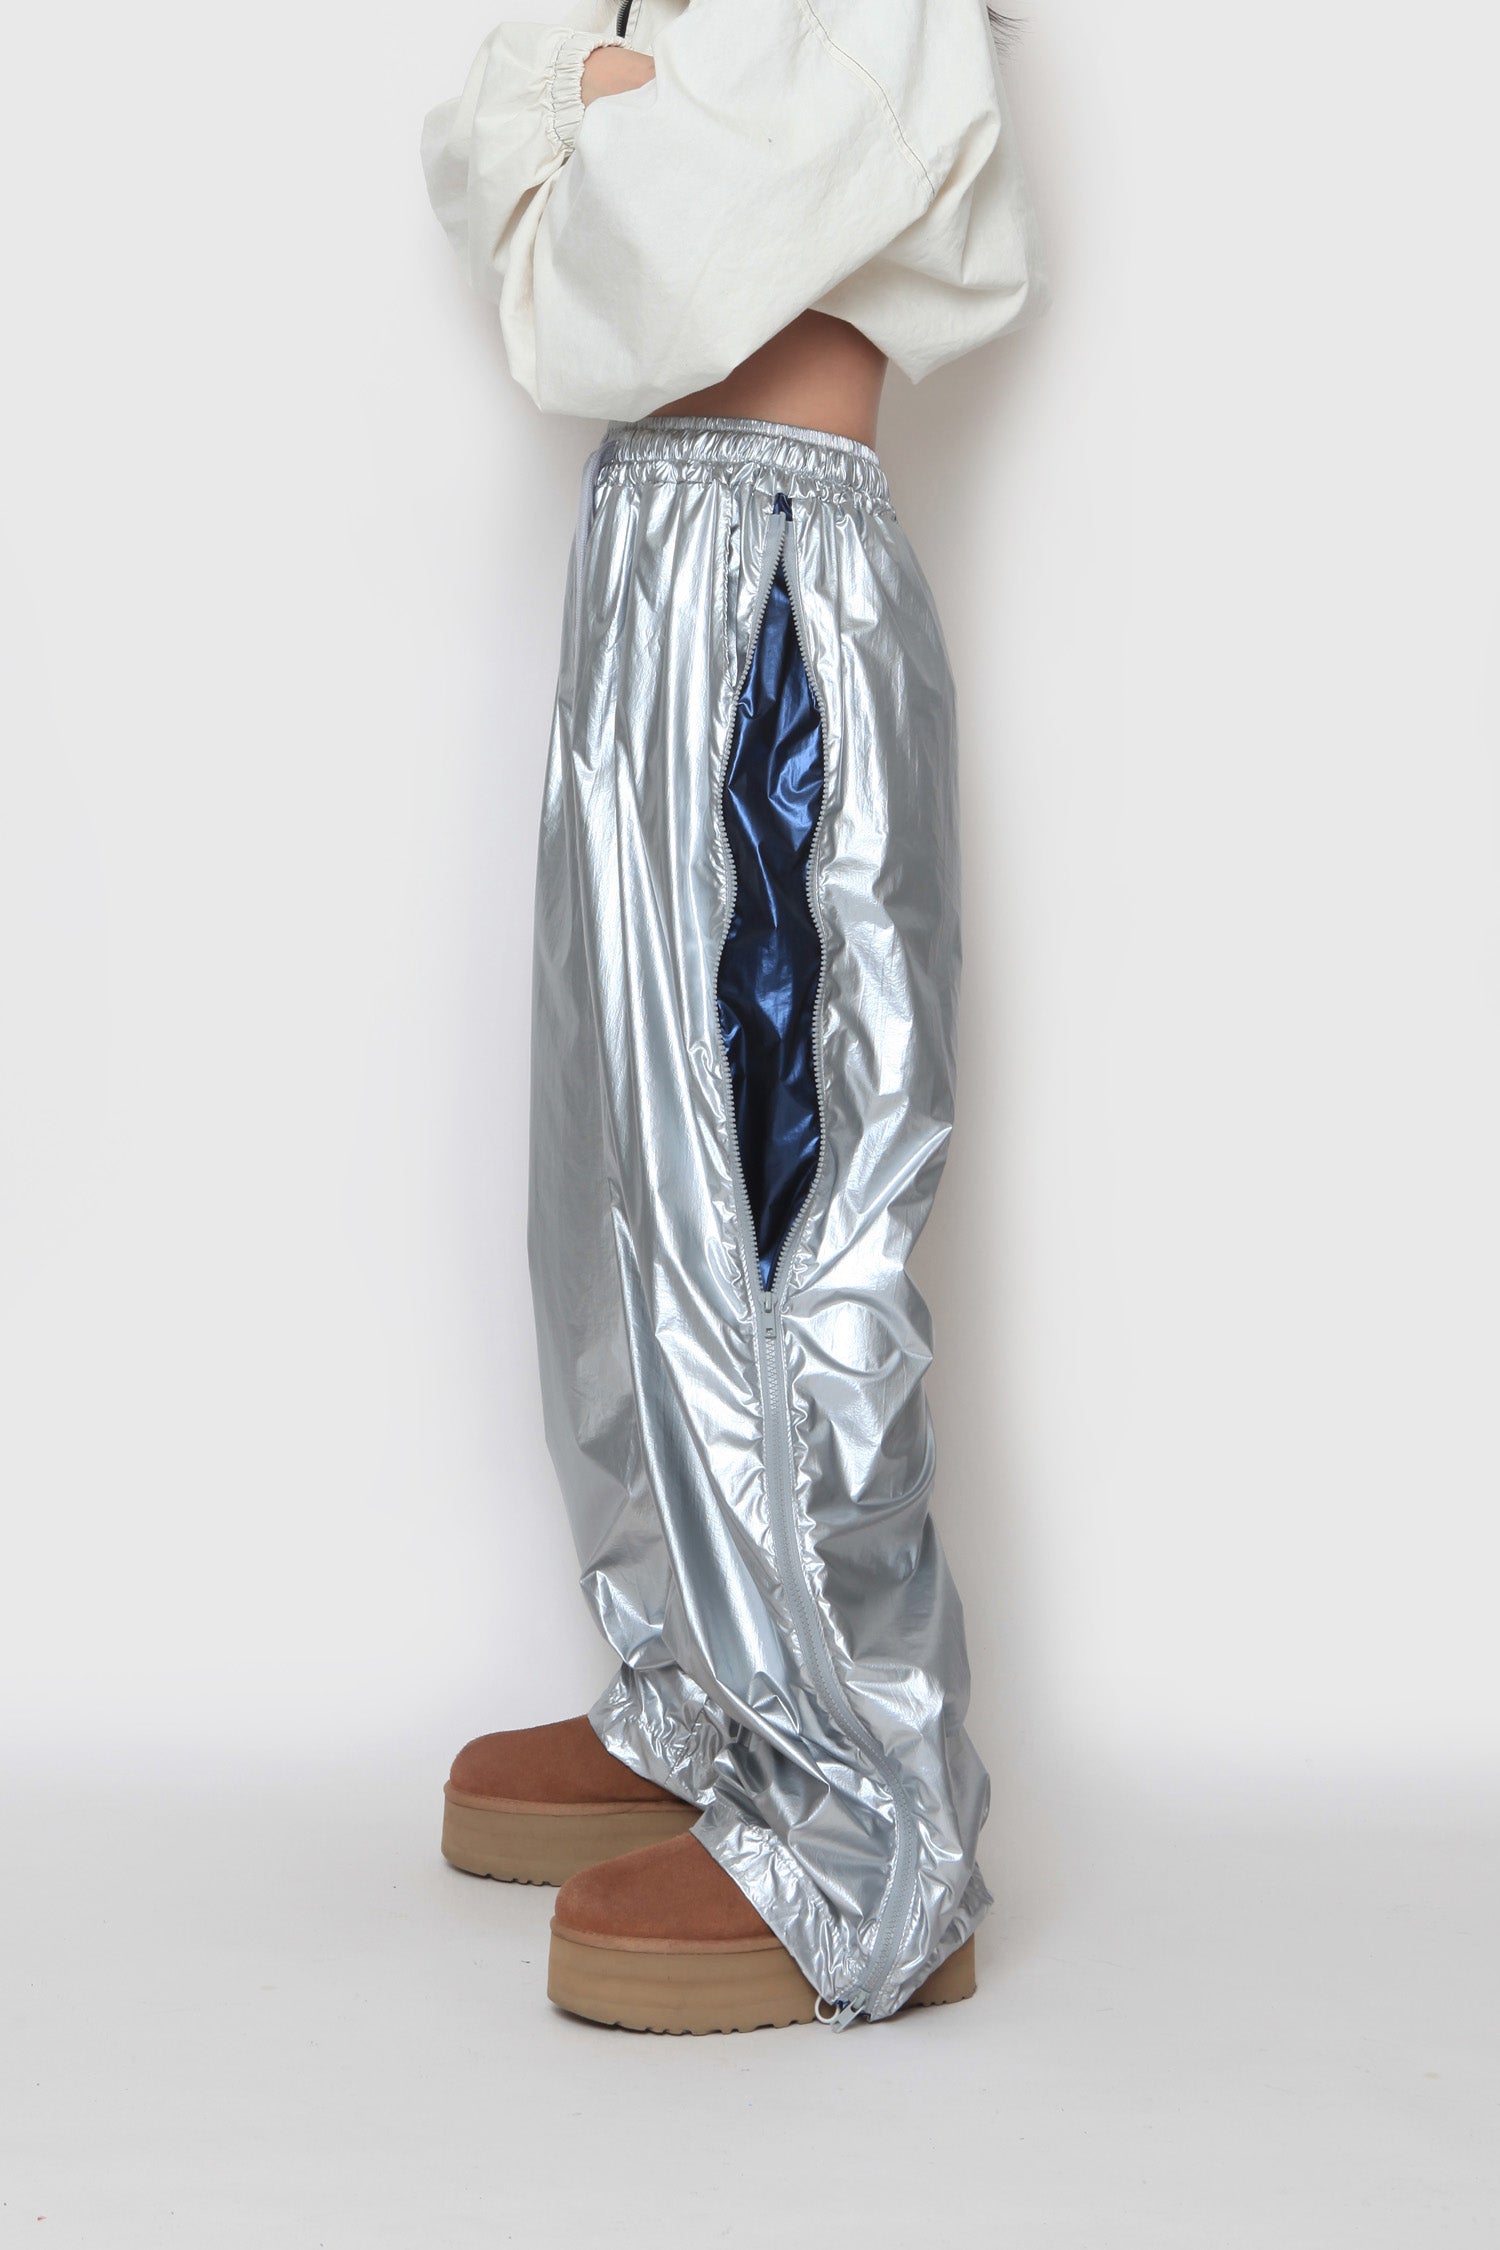 metal side zipper pants